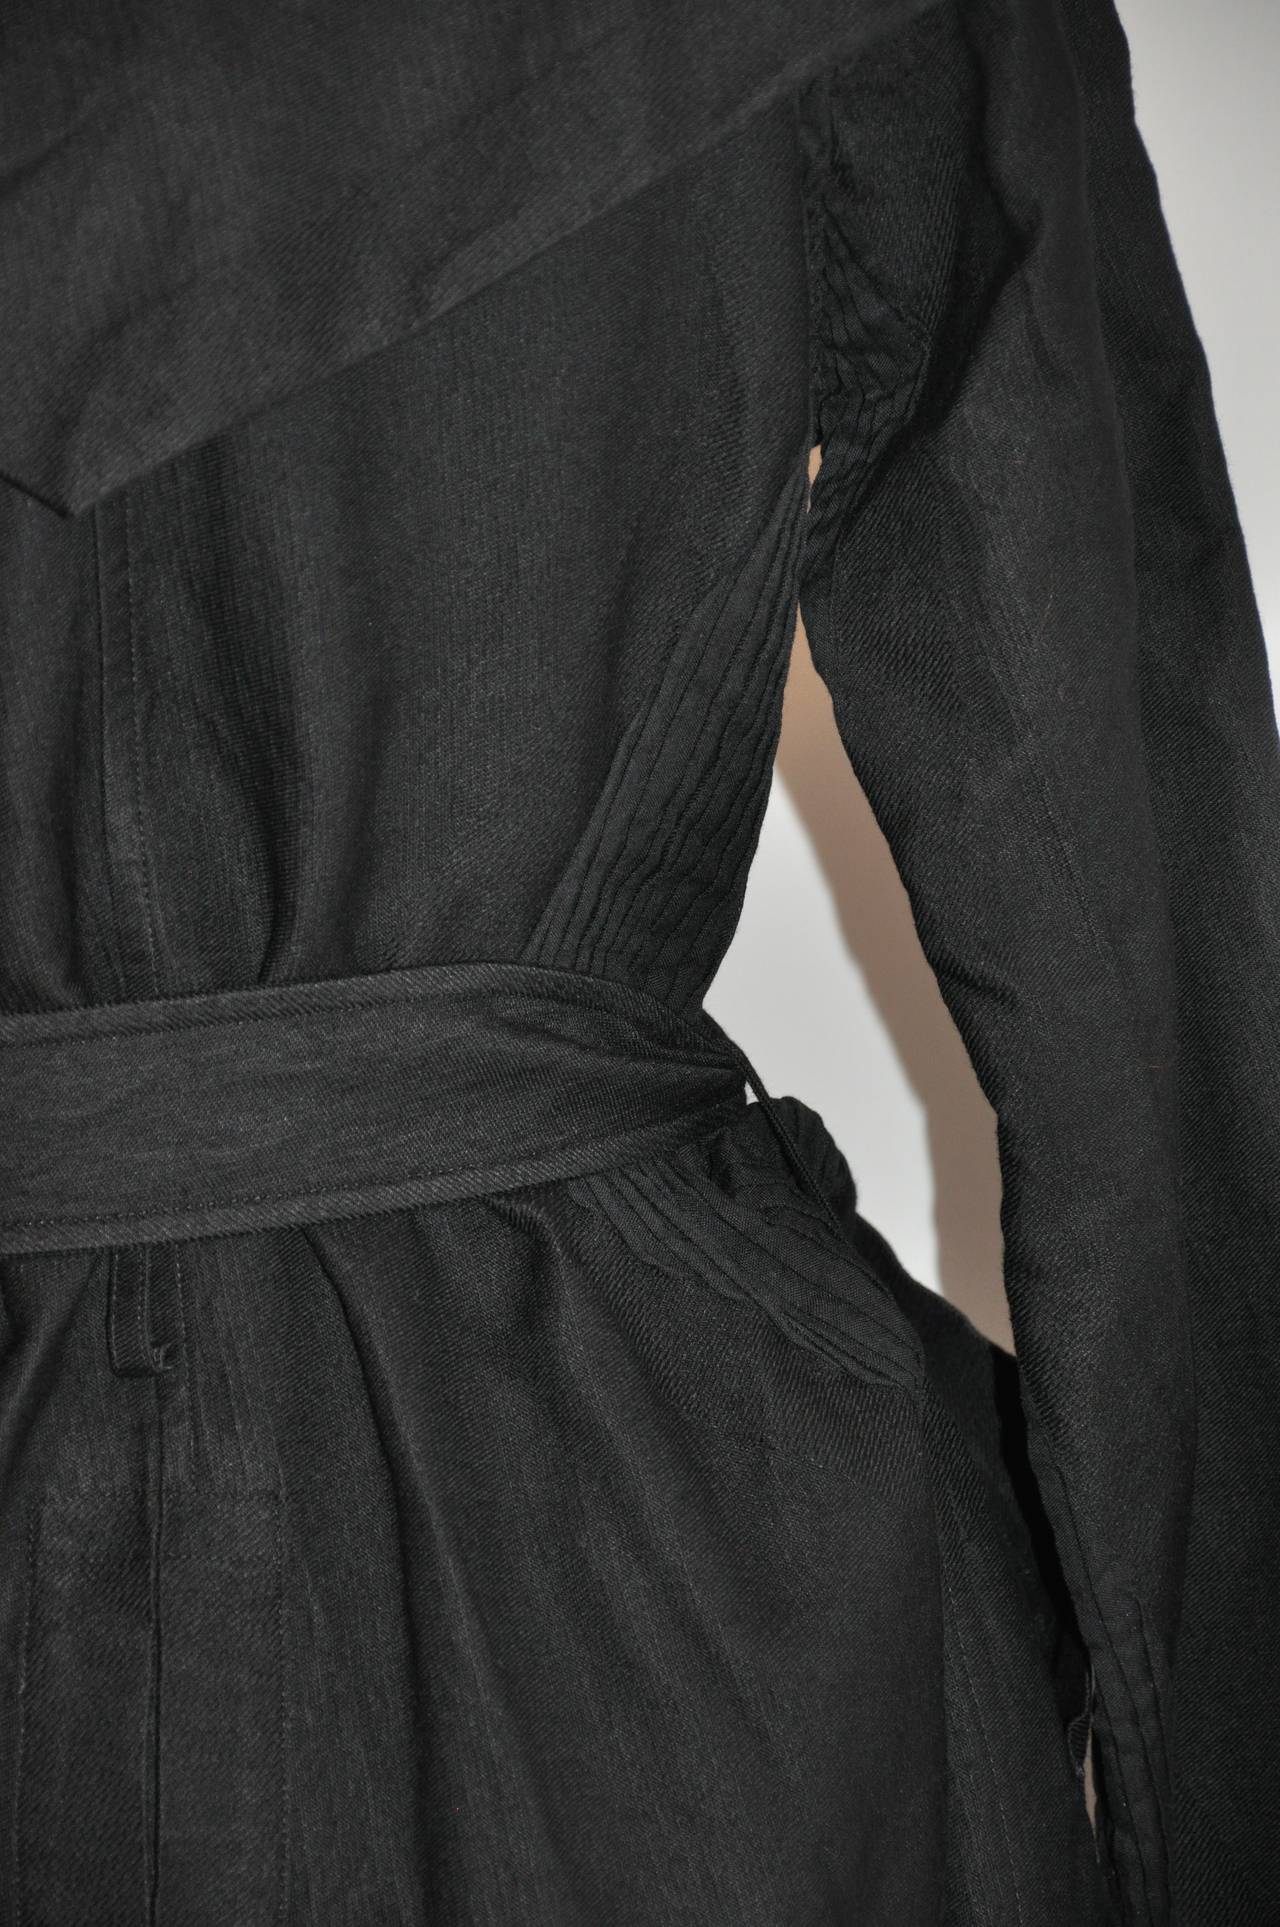 Issey Miyake Dramatic Black Trench-Style Coat with Belt 5